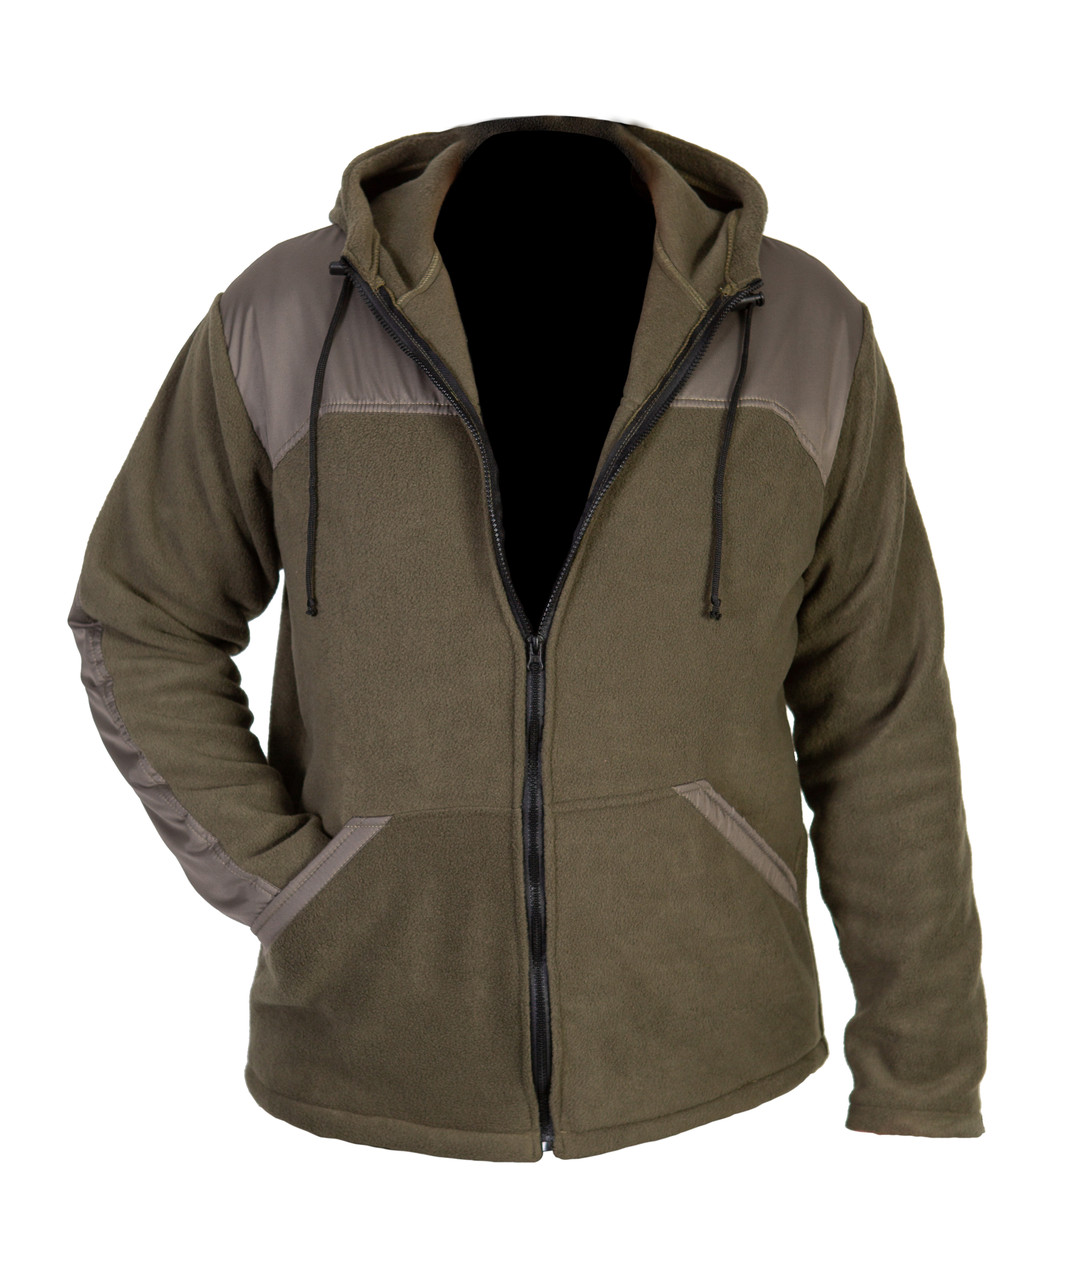 Куртка из флиса на молнии, размер 3XL, цвет олива